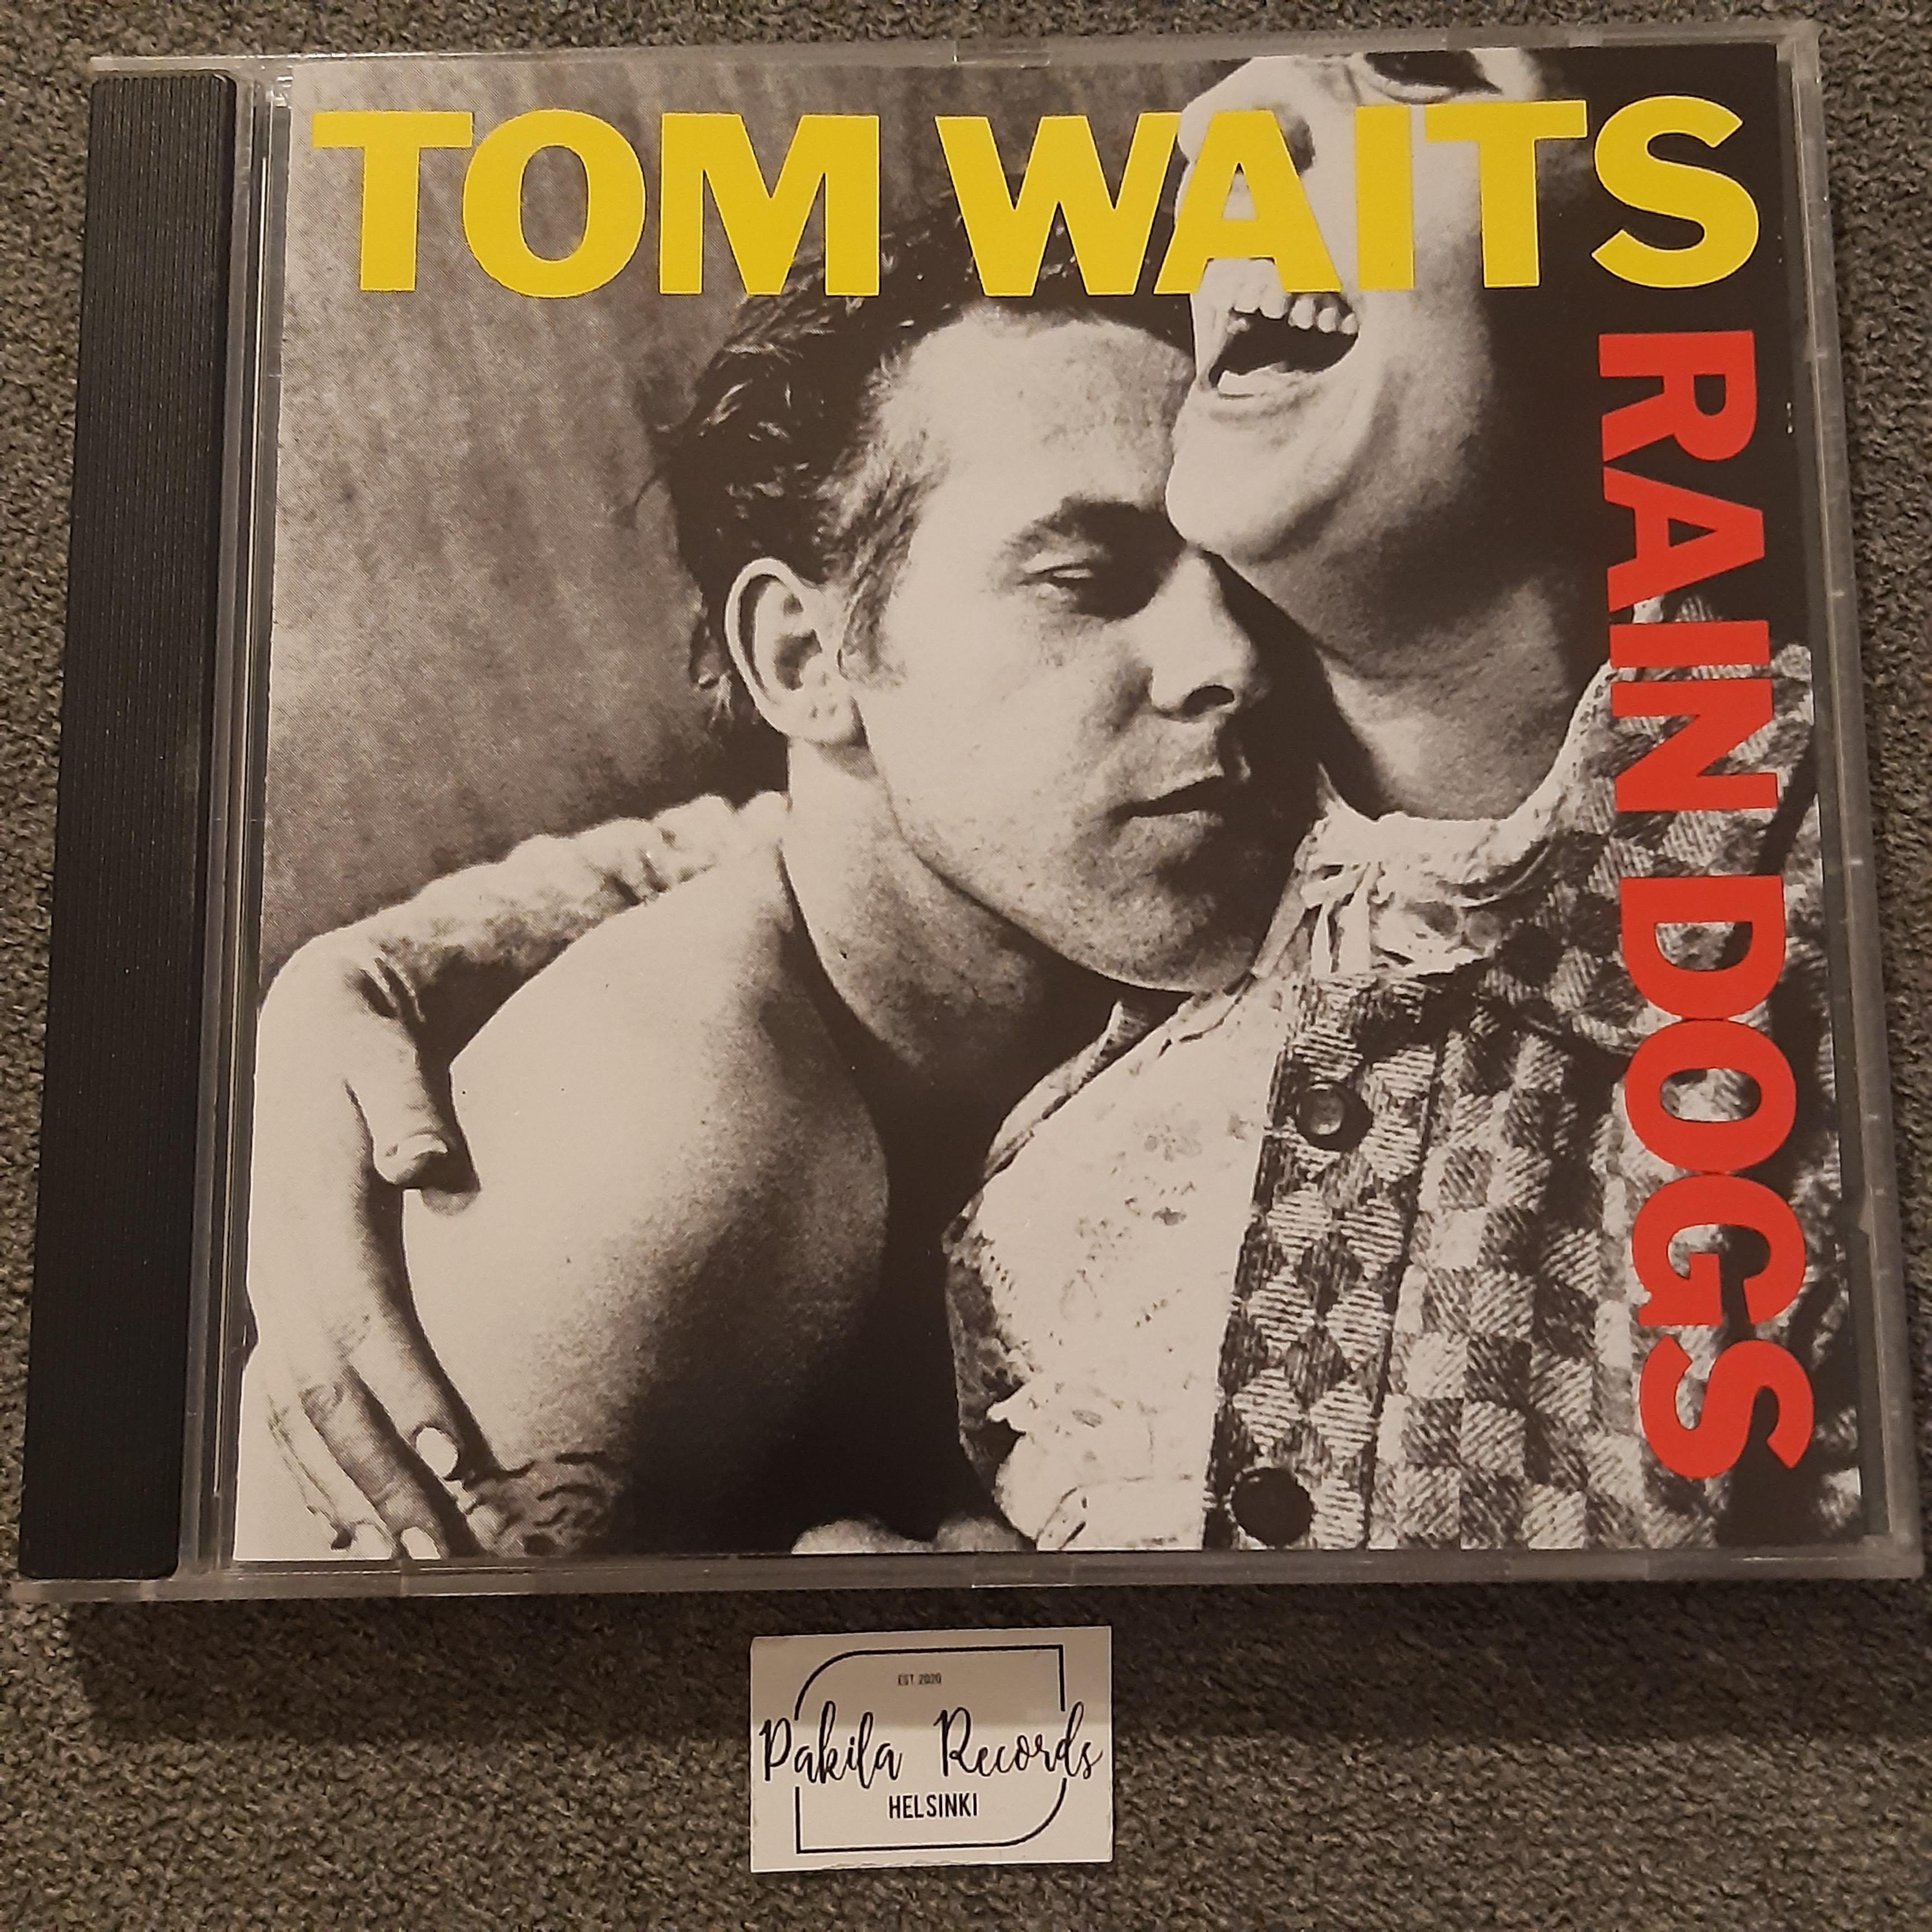 Tom waits - Rain Dogs - CD (käytetty)